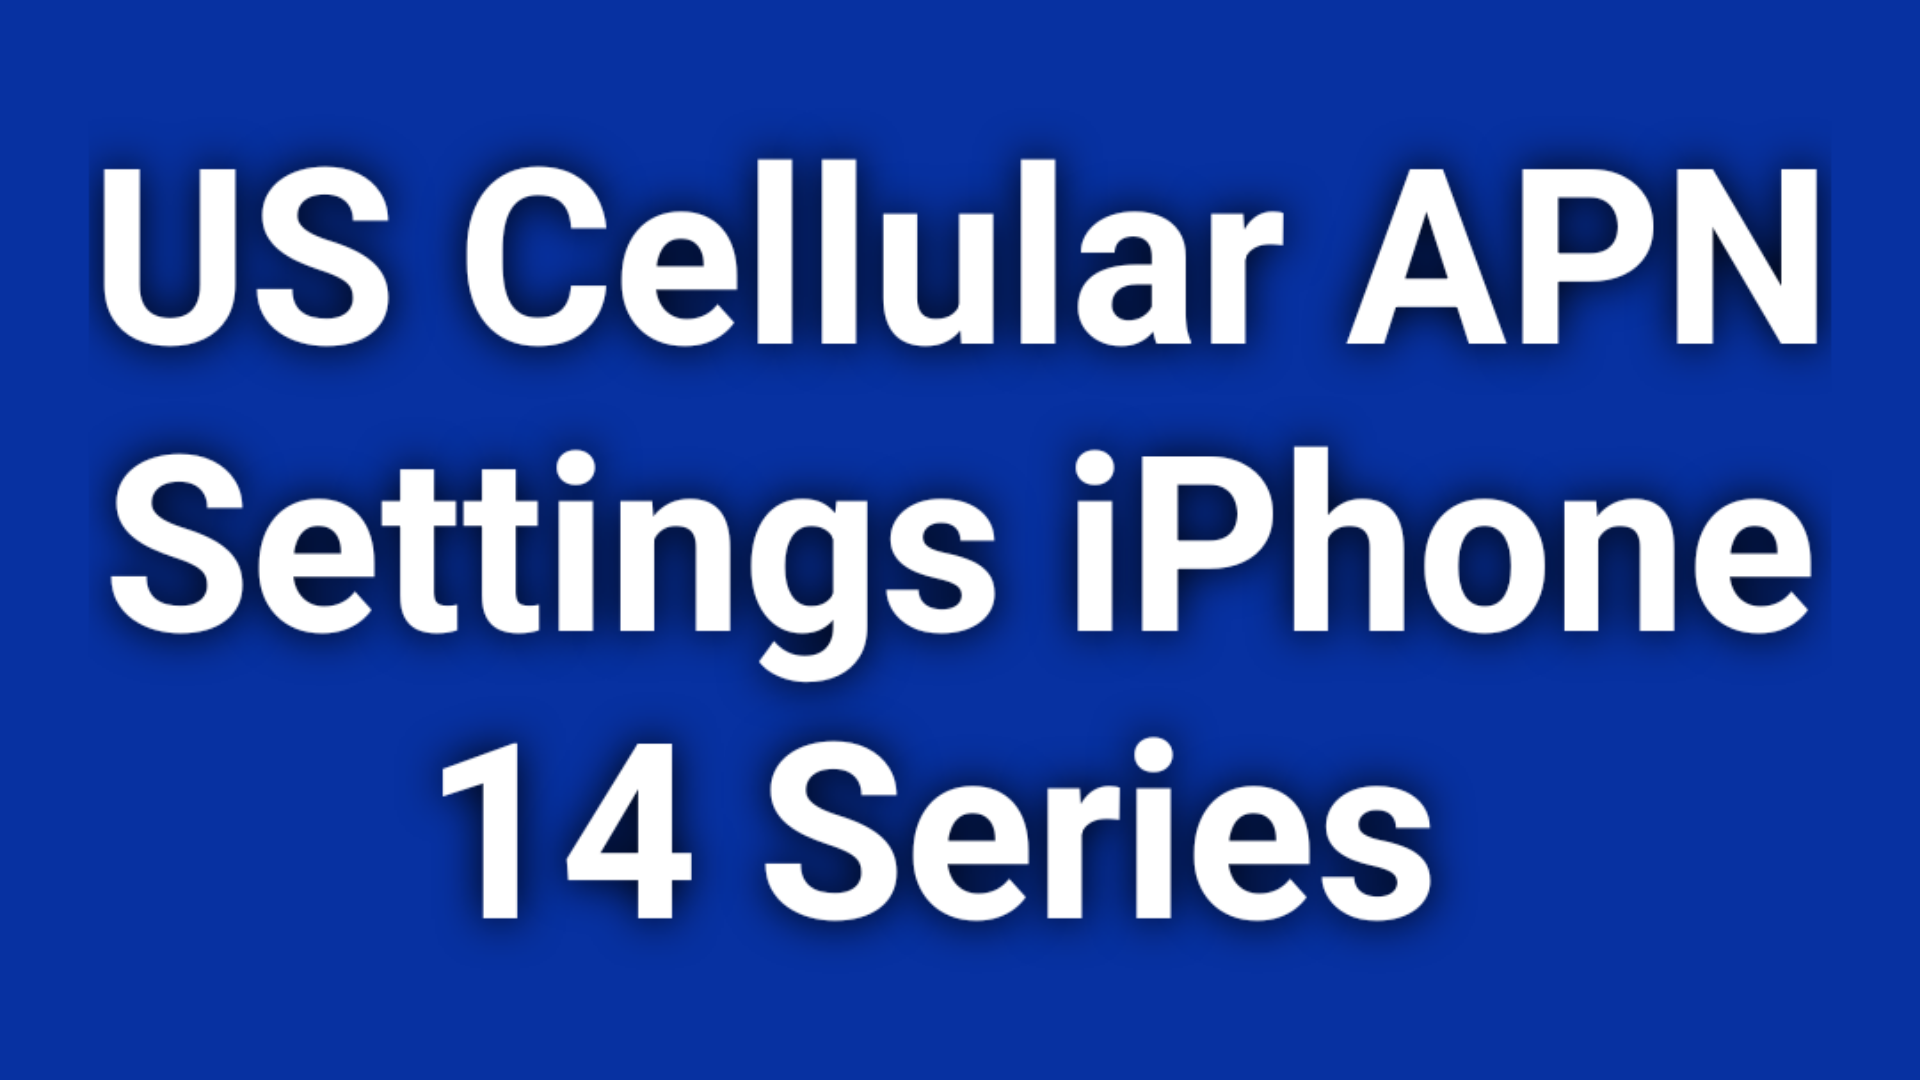 US Cellular APN Settings iPhone 14 series